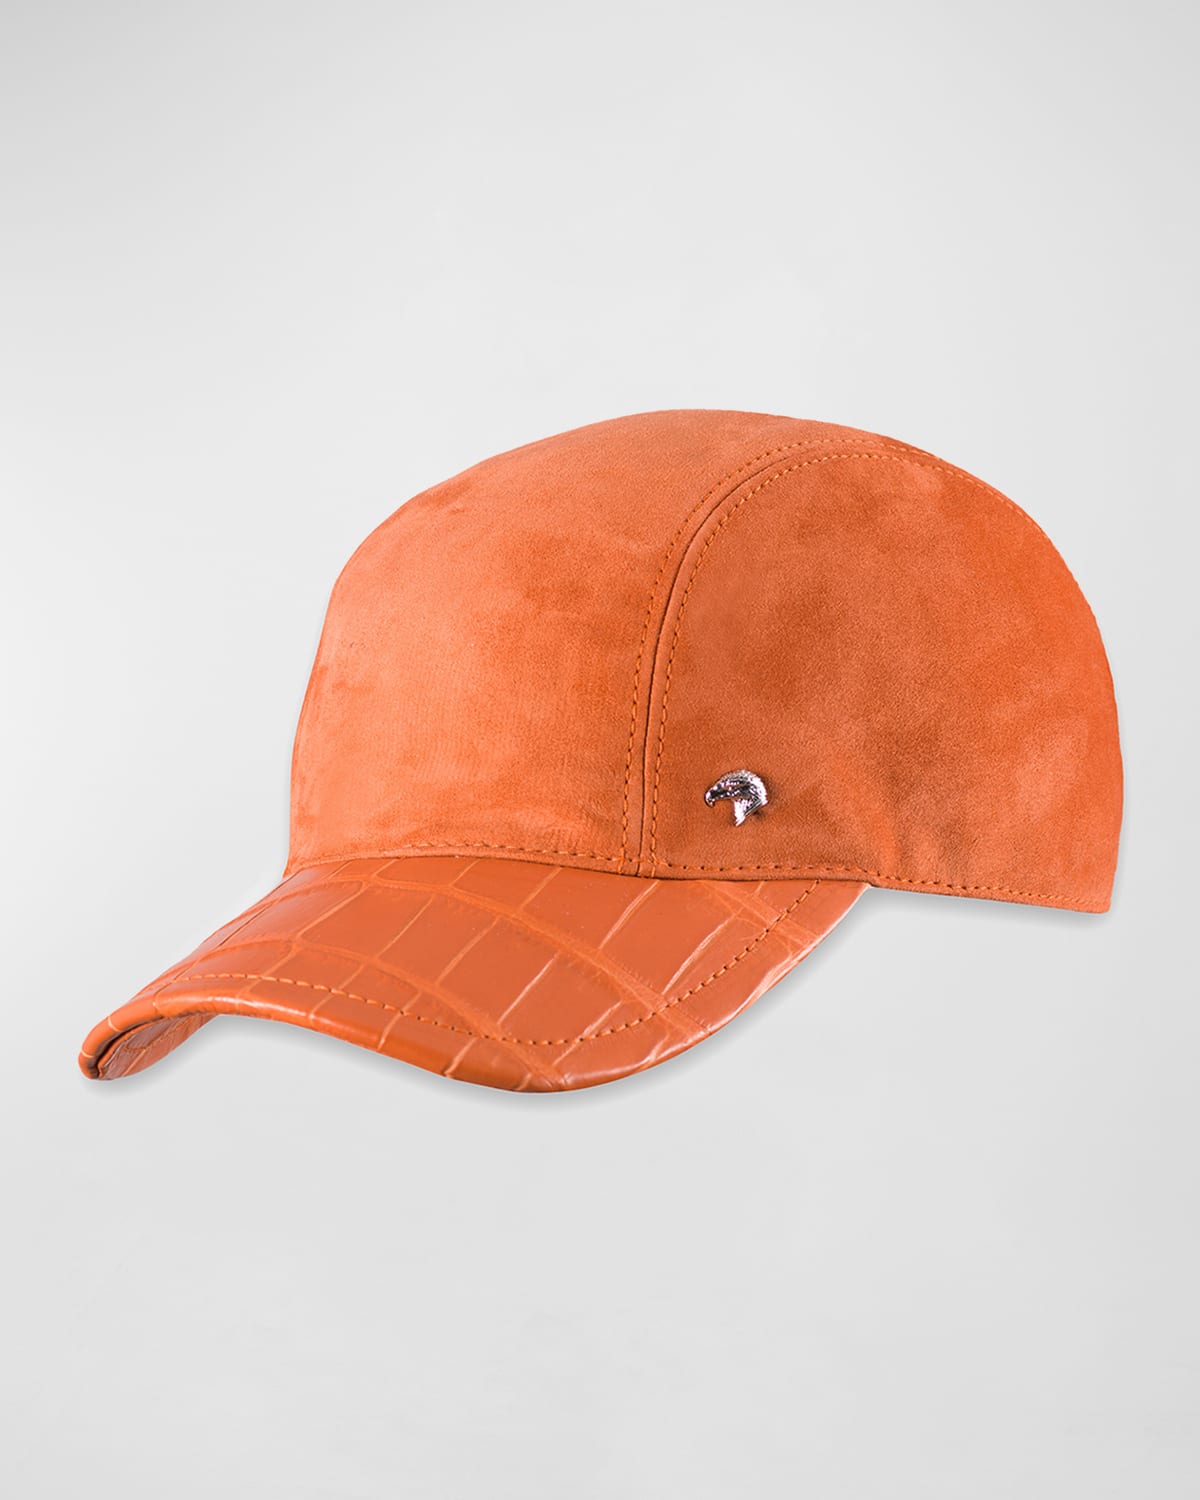 Men's Eagle Suede/Crocodile Leather Baseball Hat